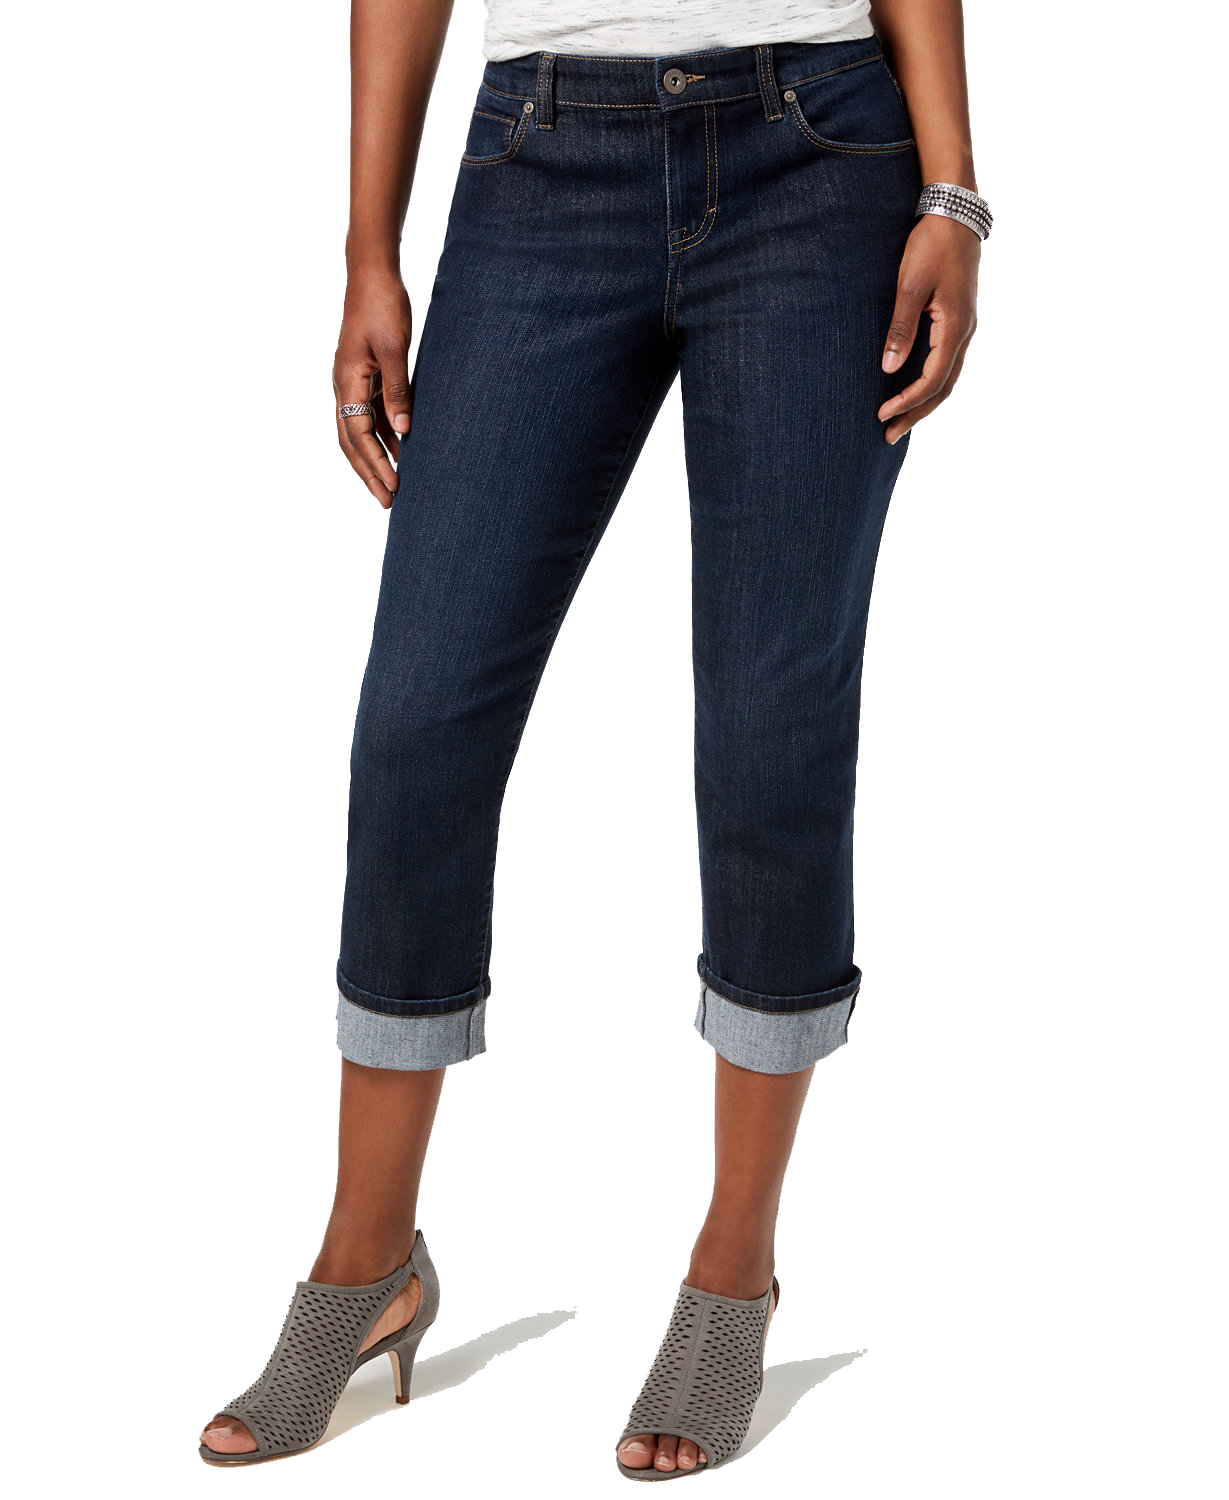 syv Mindful ressource Style & Co Women's Petite Curvy Cuffed Capri Jeans (4 Petite, Caneel)  191594519563 | eBay